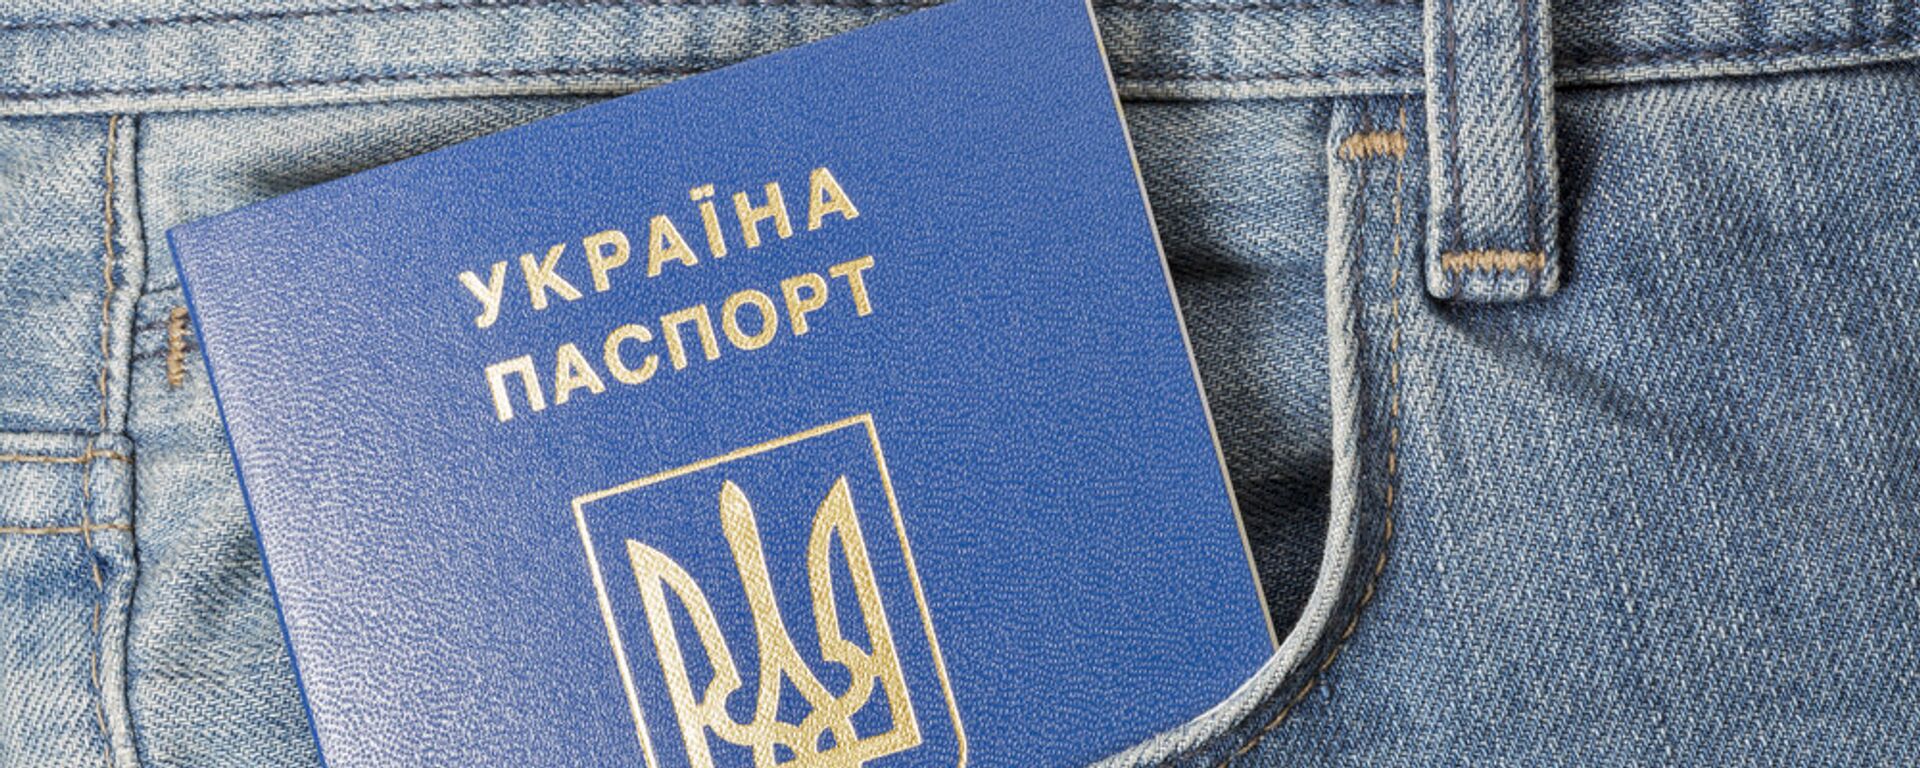 Украинский паспорт в кармане джинсов, архивное фото - Sputnik Литва, 1920, 16.02.2022